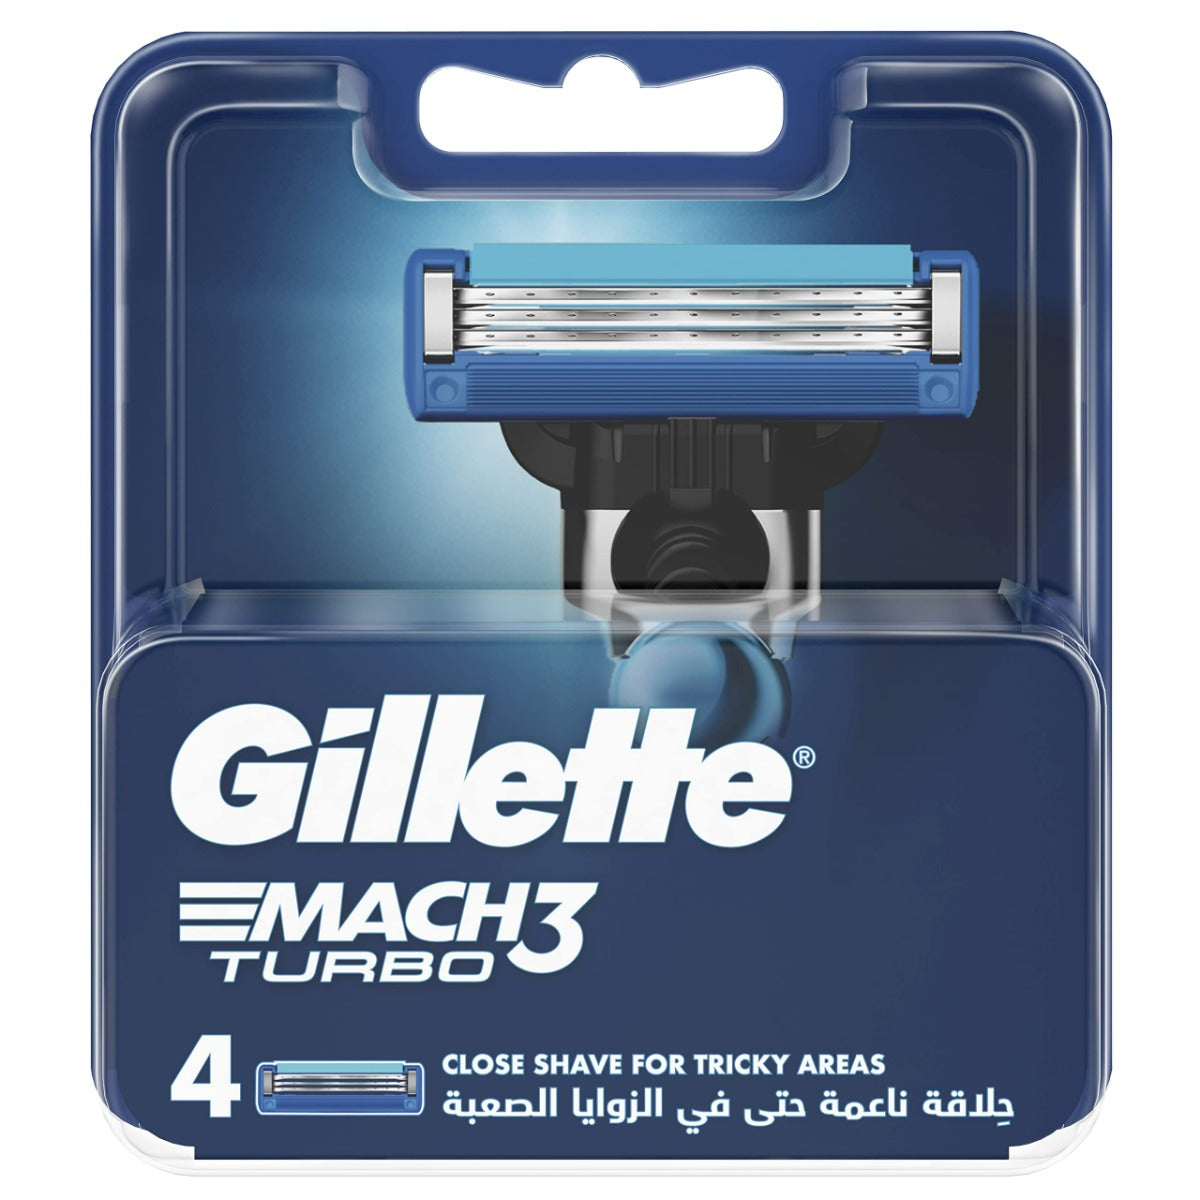 Gillette Mach3 Turbo Manual Shaving Razor Blades - 4s Pack (Cartridge)